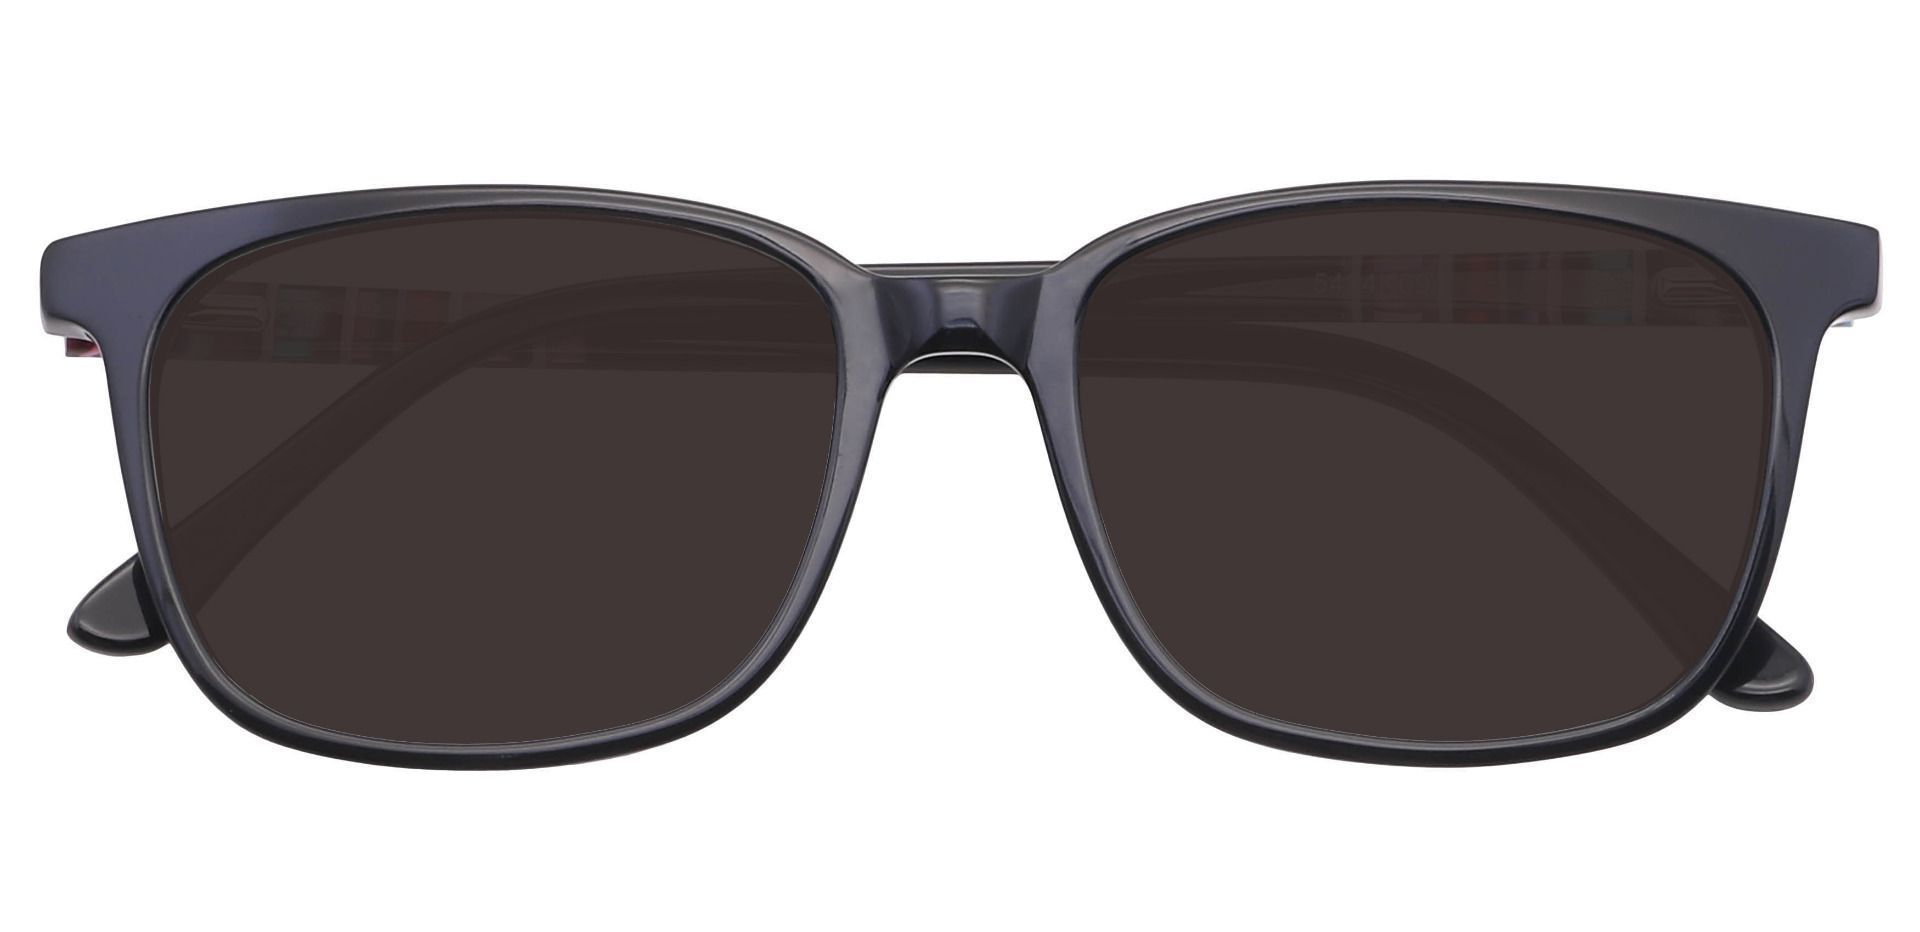 Fern Square Progressive Sunglasses - Black Frame With Gray Lenses